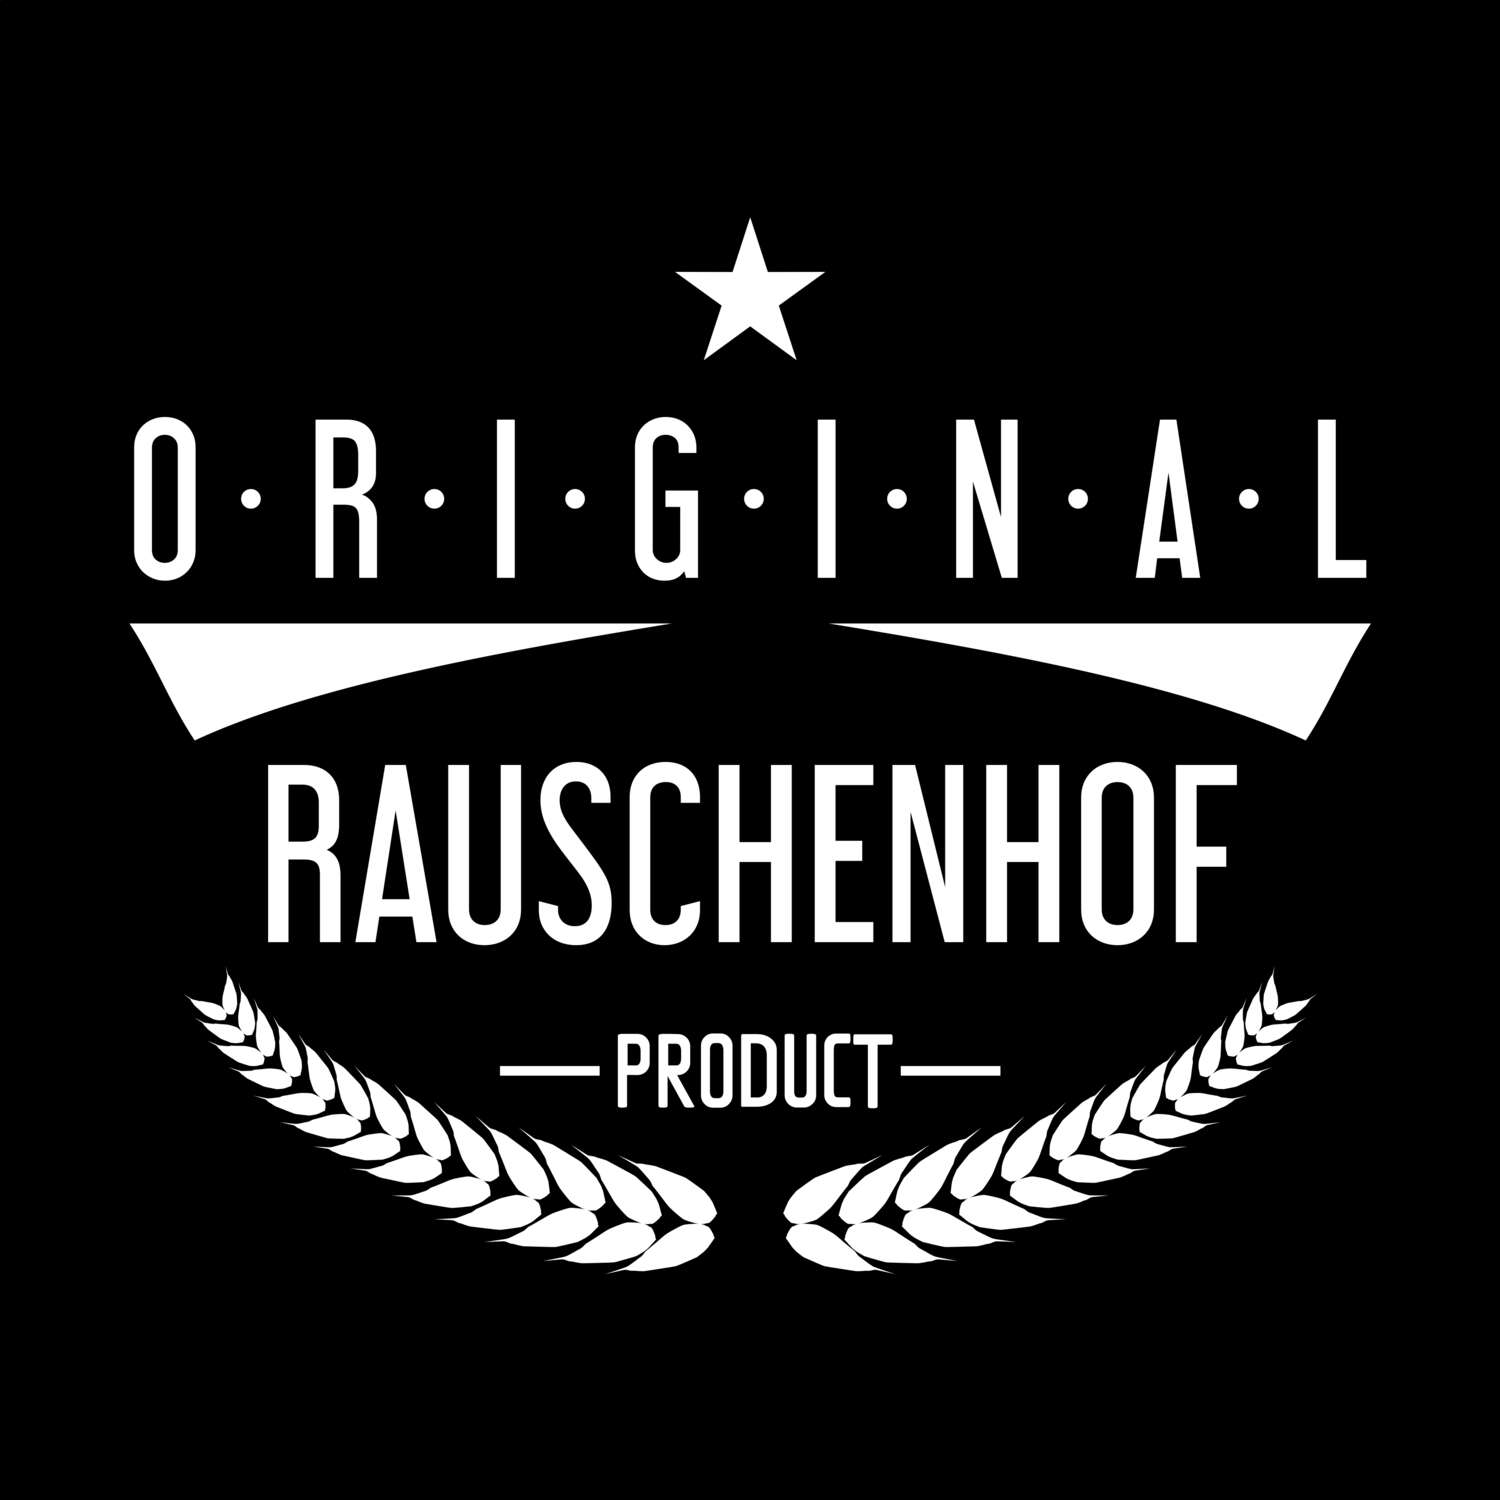 Rauschenhof T-Shirt »Original Product«